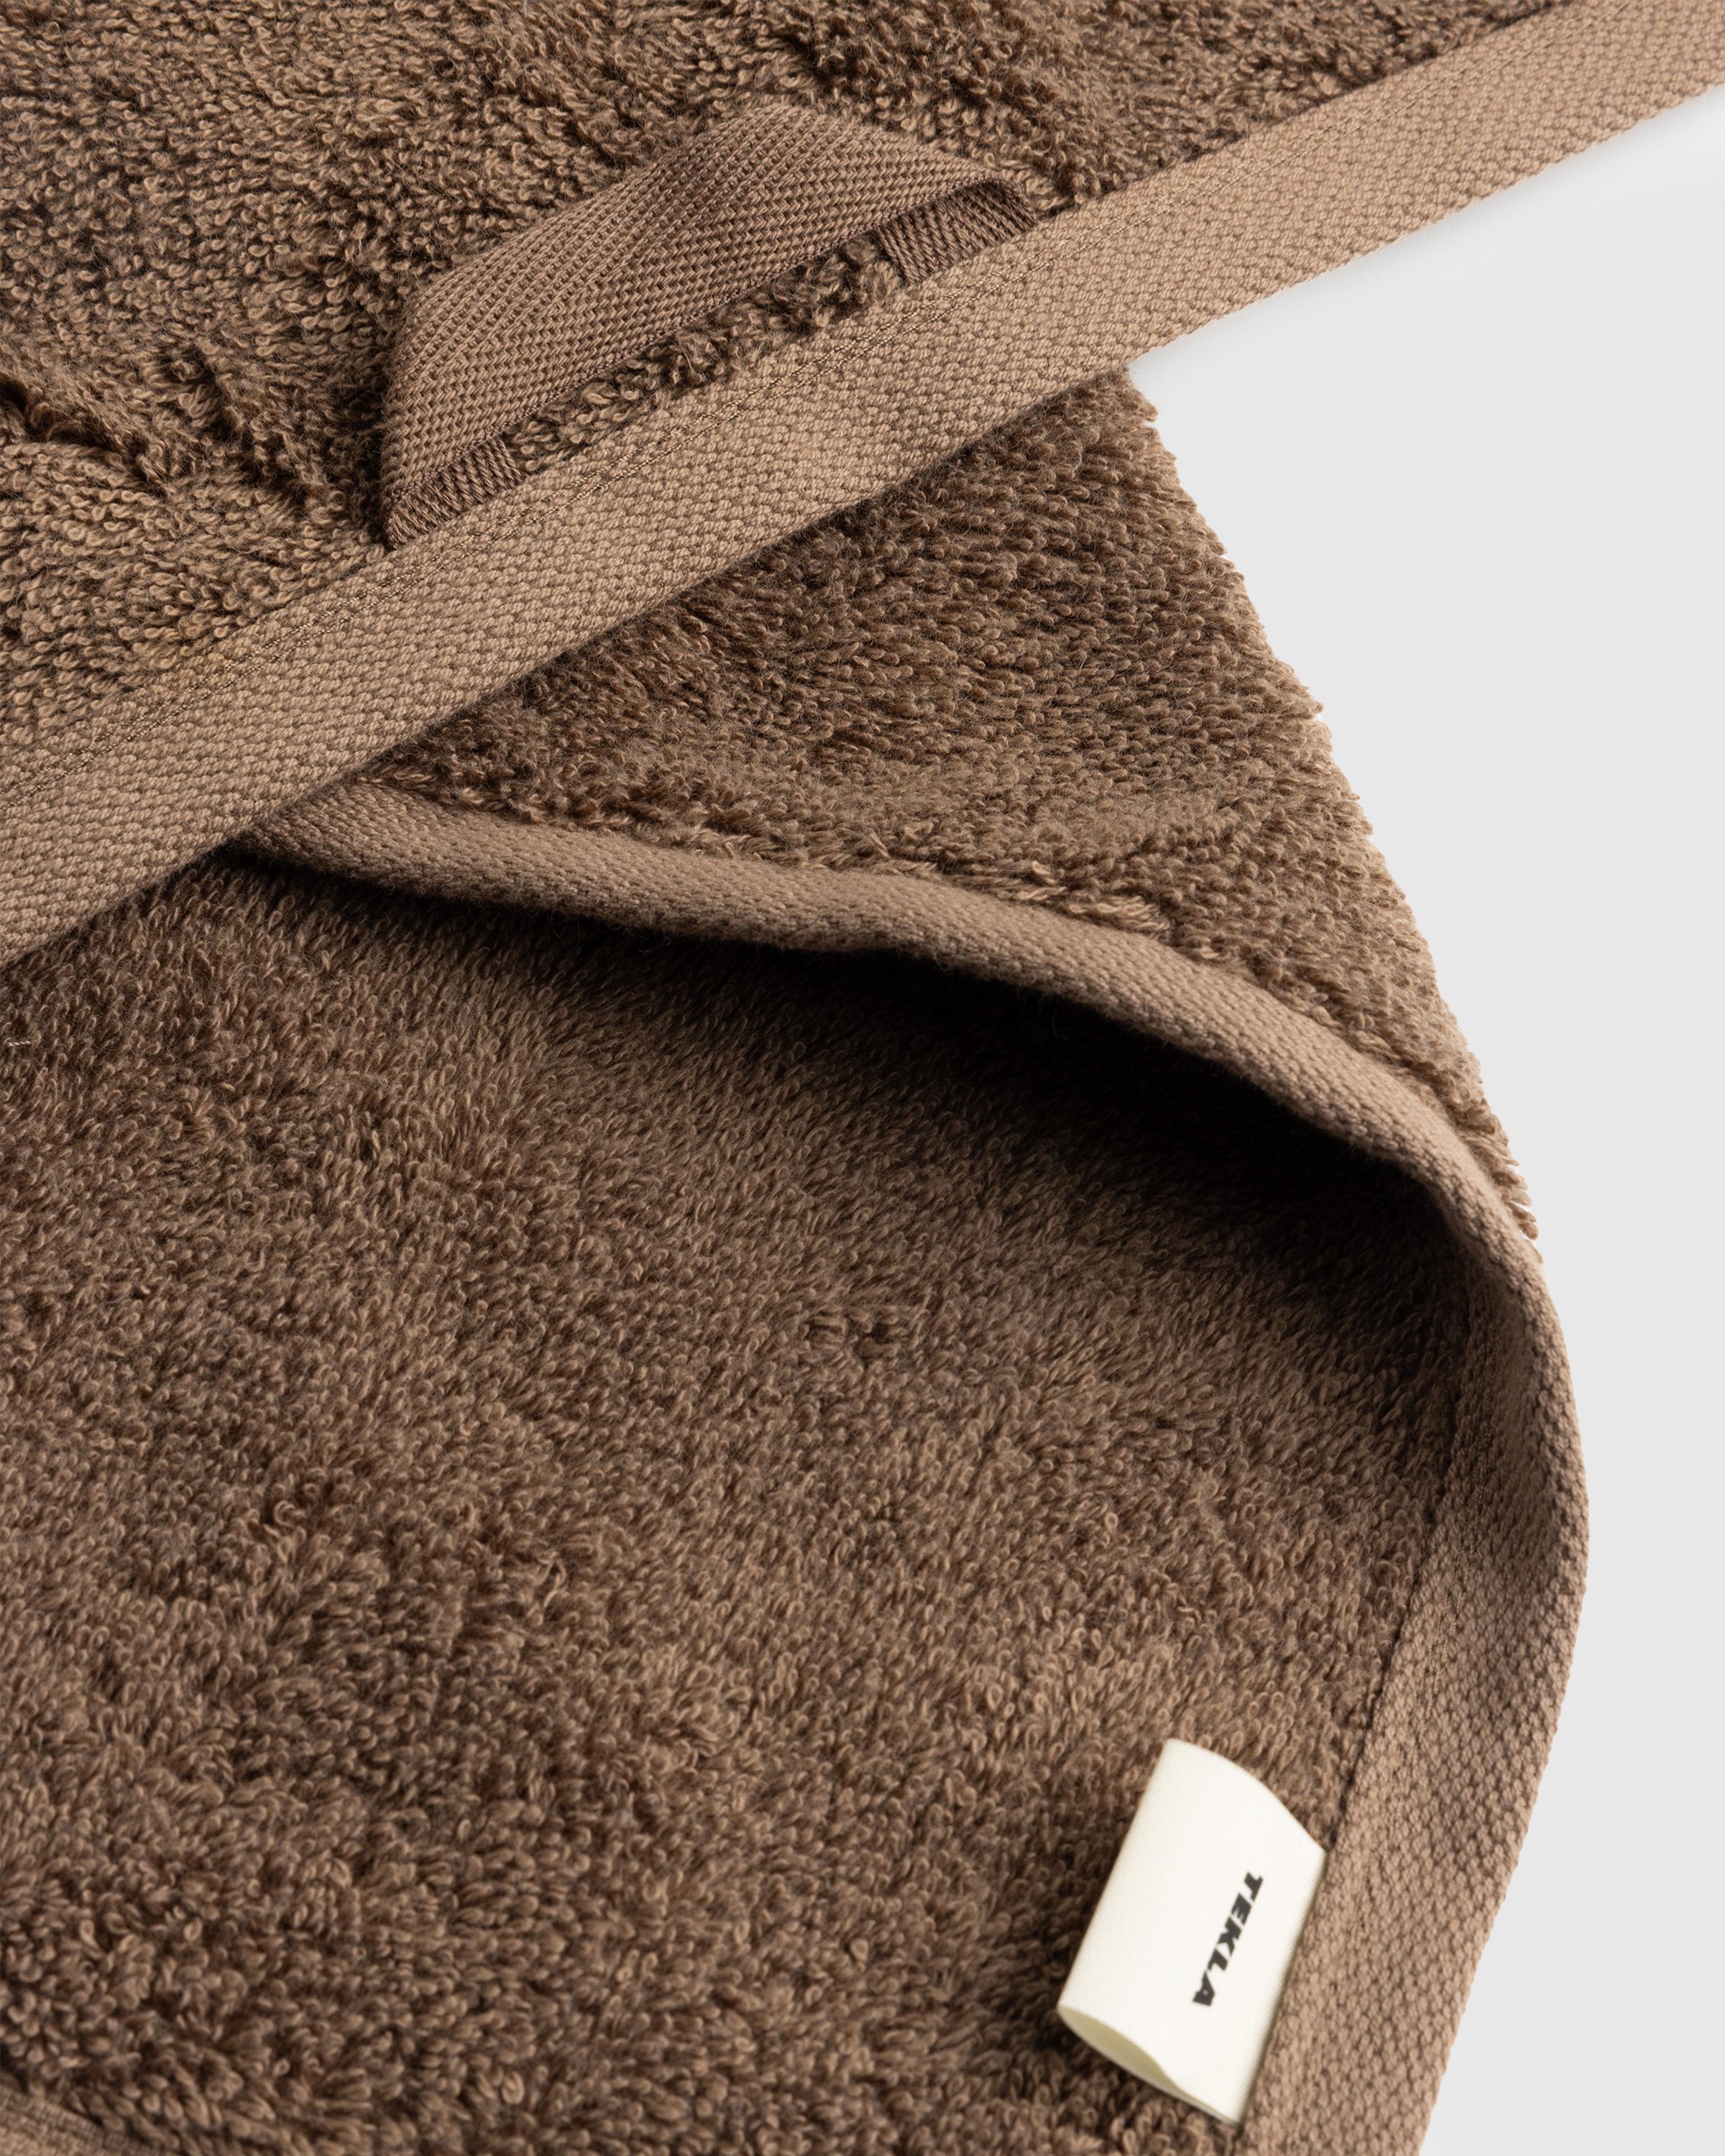 Tekla - Guest Towel Kodiak Brown - Lifestyle - Brown - Image 4